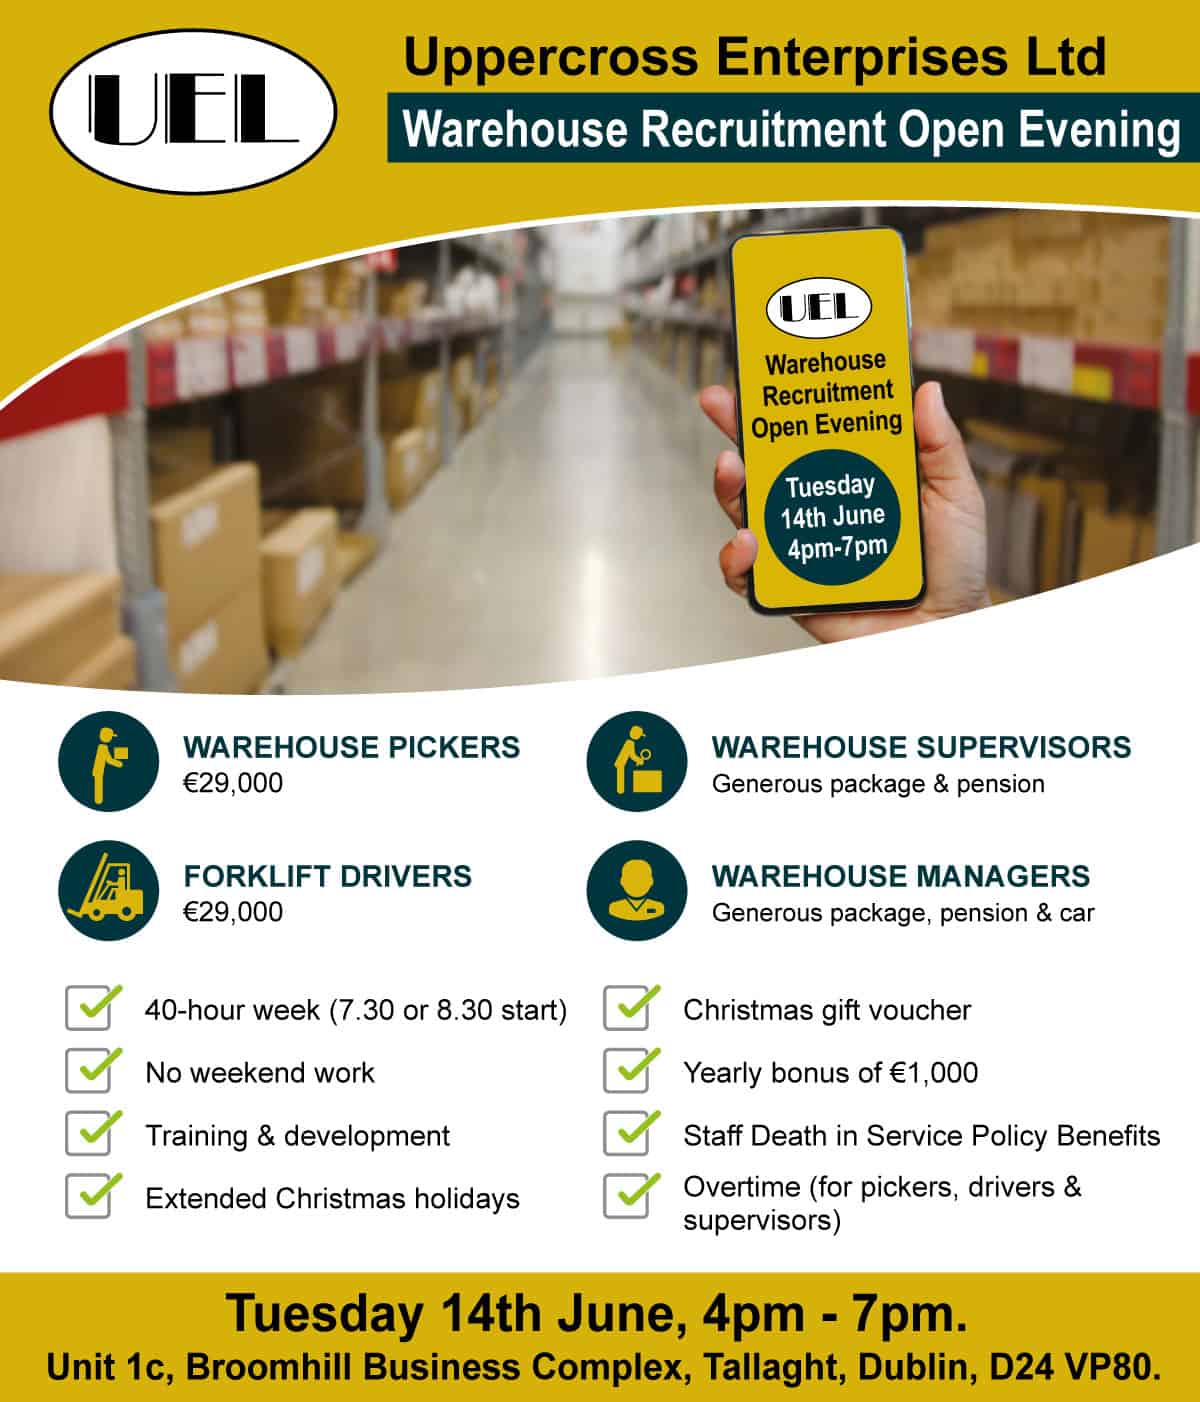 Uppercross Enterprises to host Warehouse Recruitment Open Evening on Tuesday 14th June